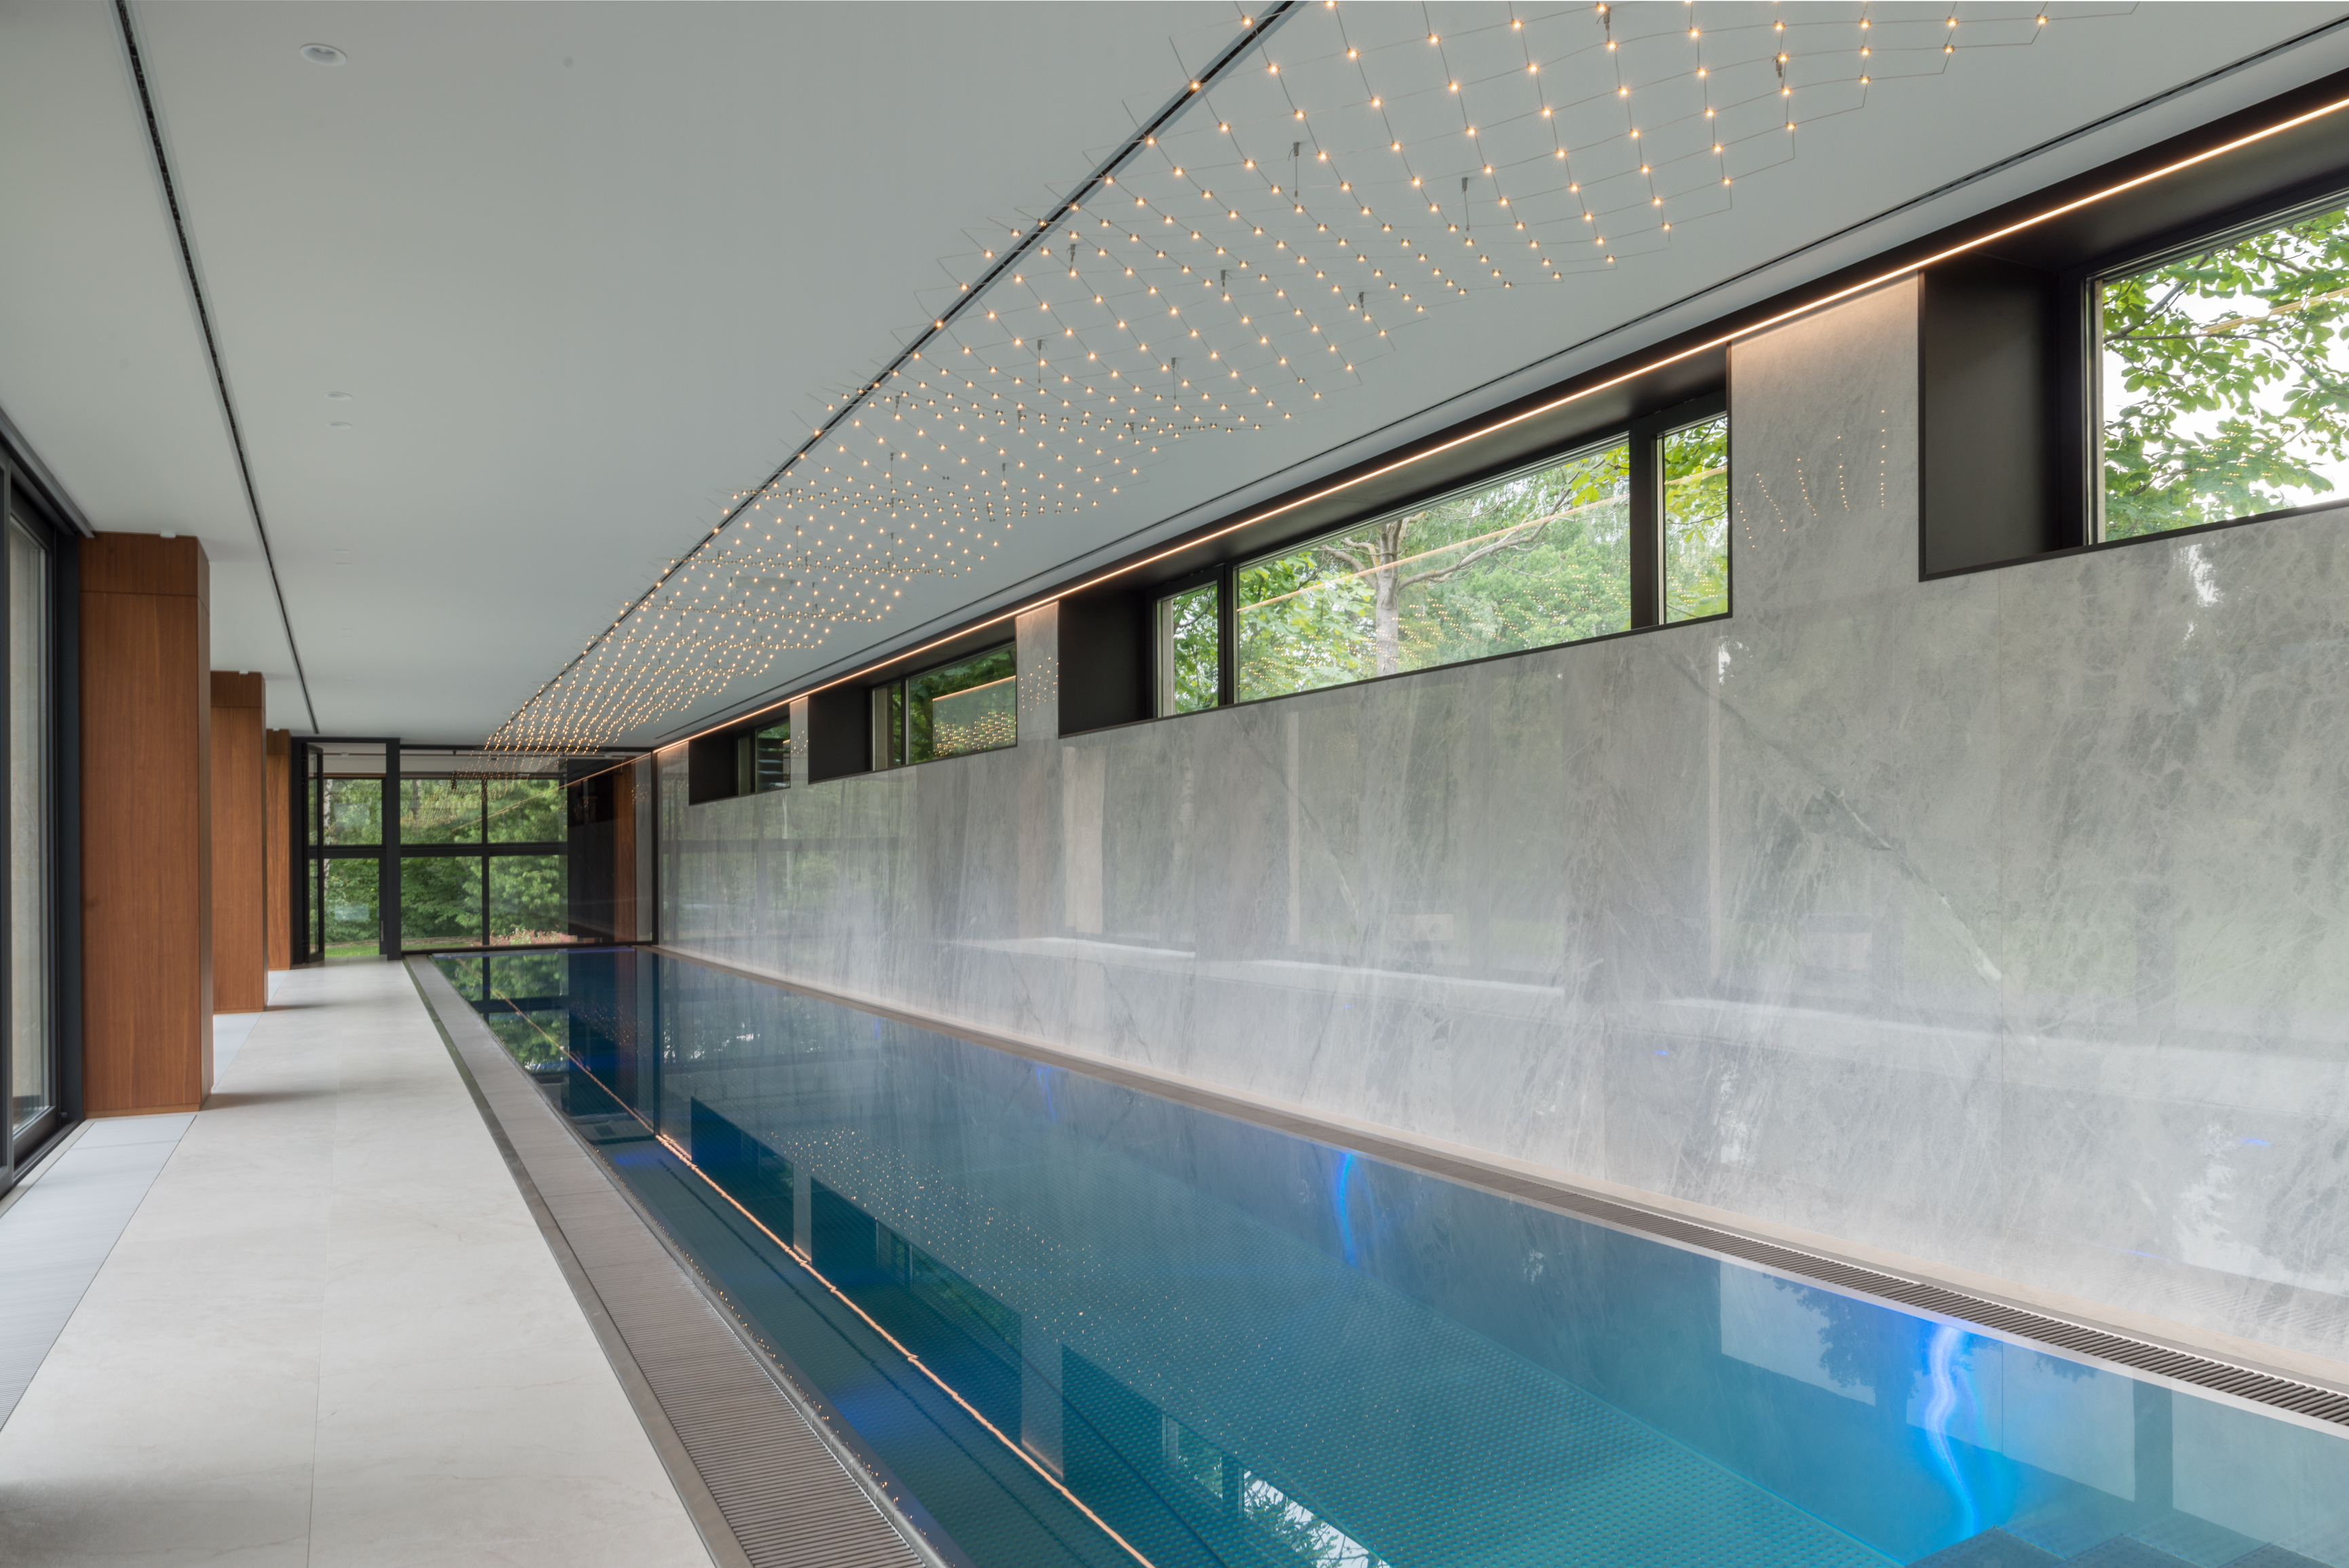 Luxury stainless steel pool IMAGINOX